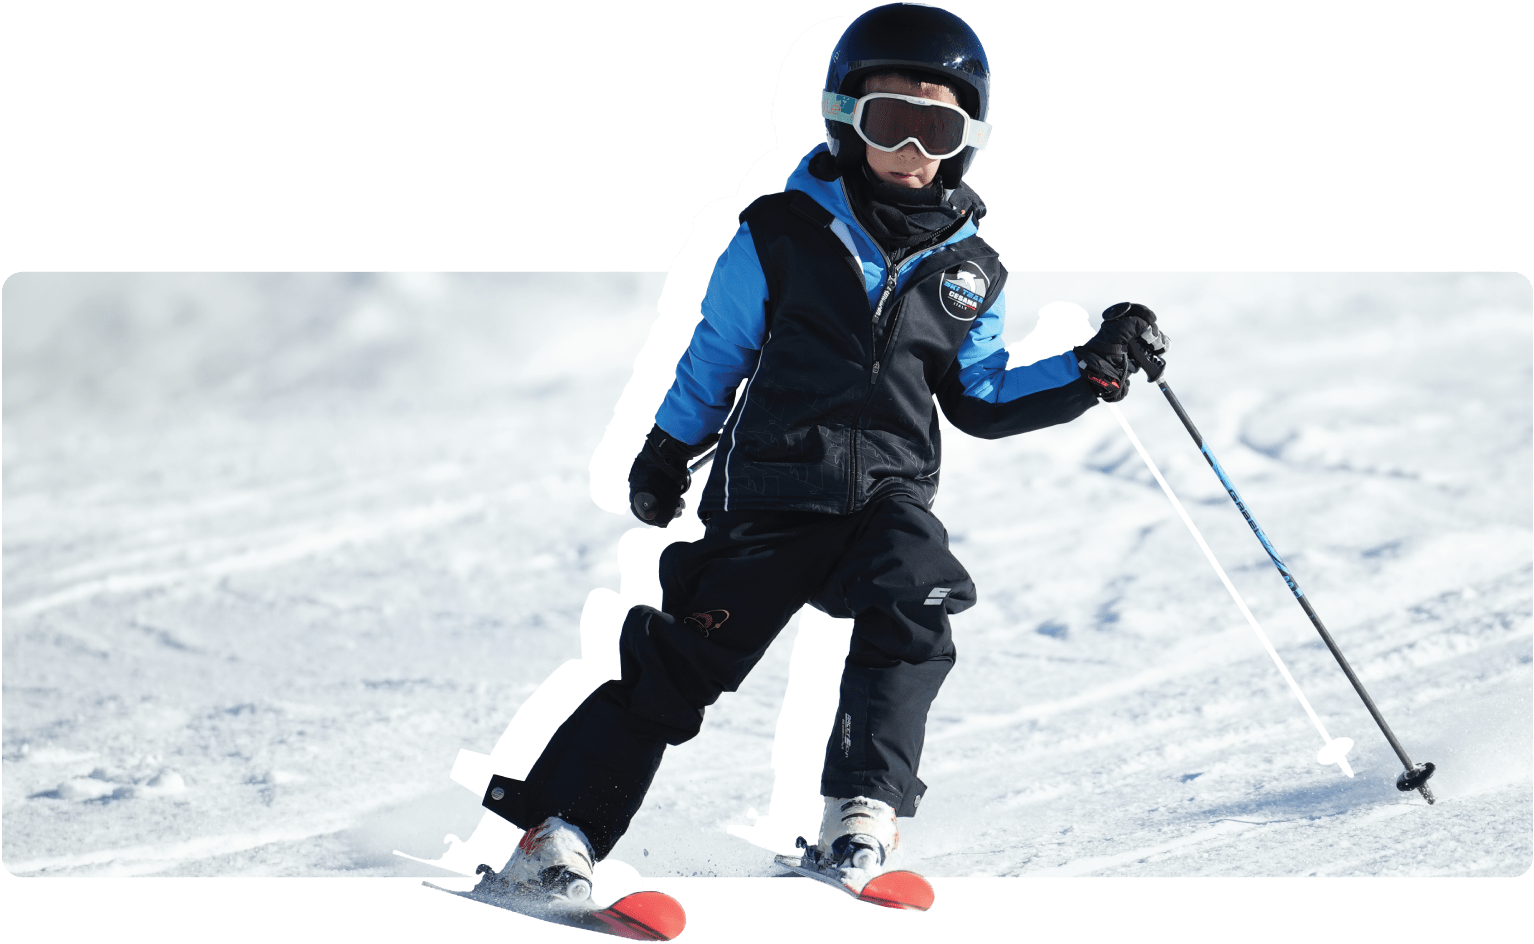 bambino ski team cesana